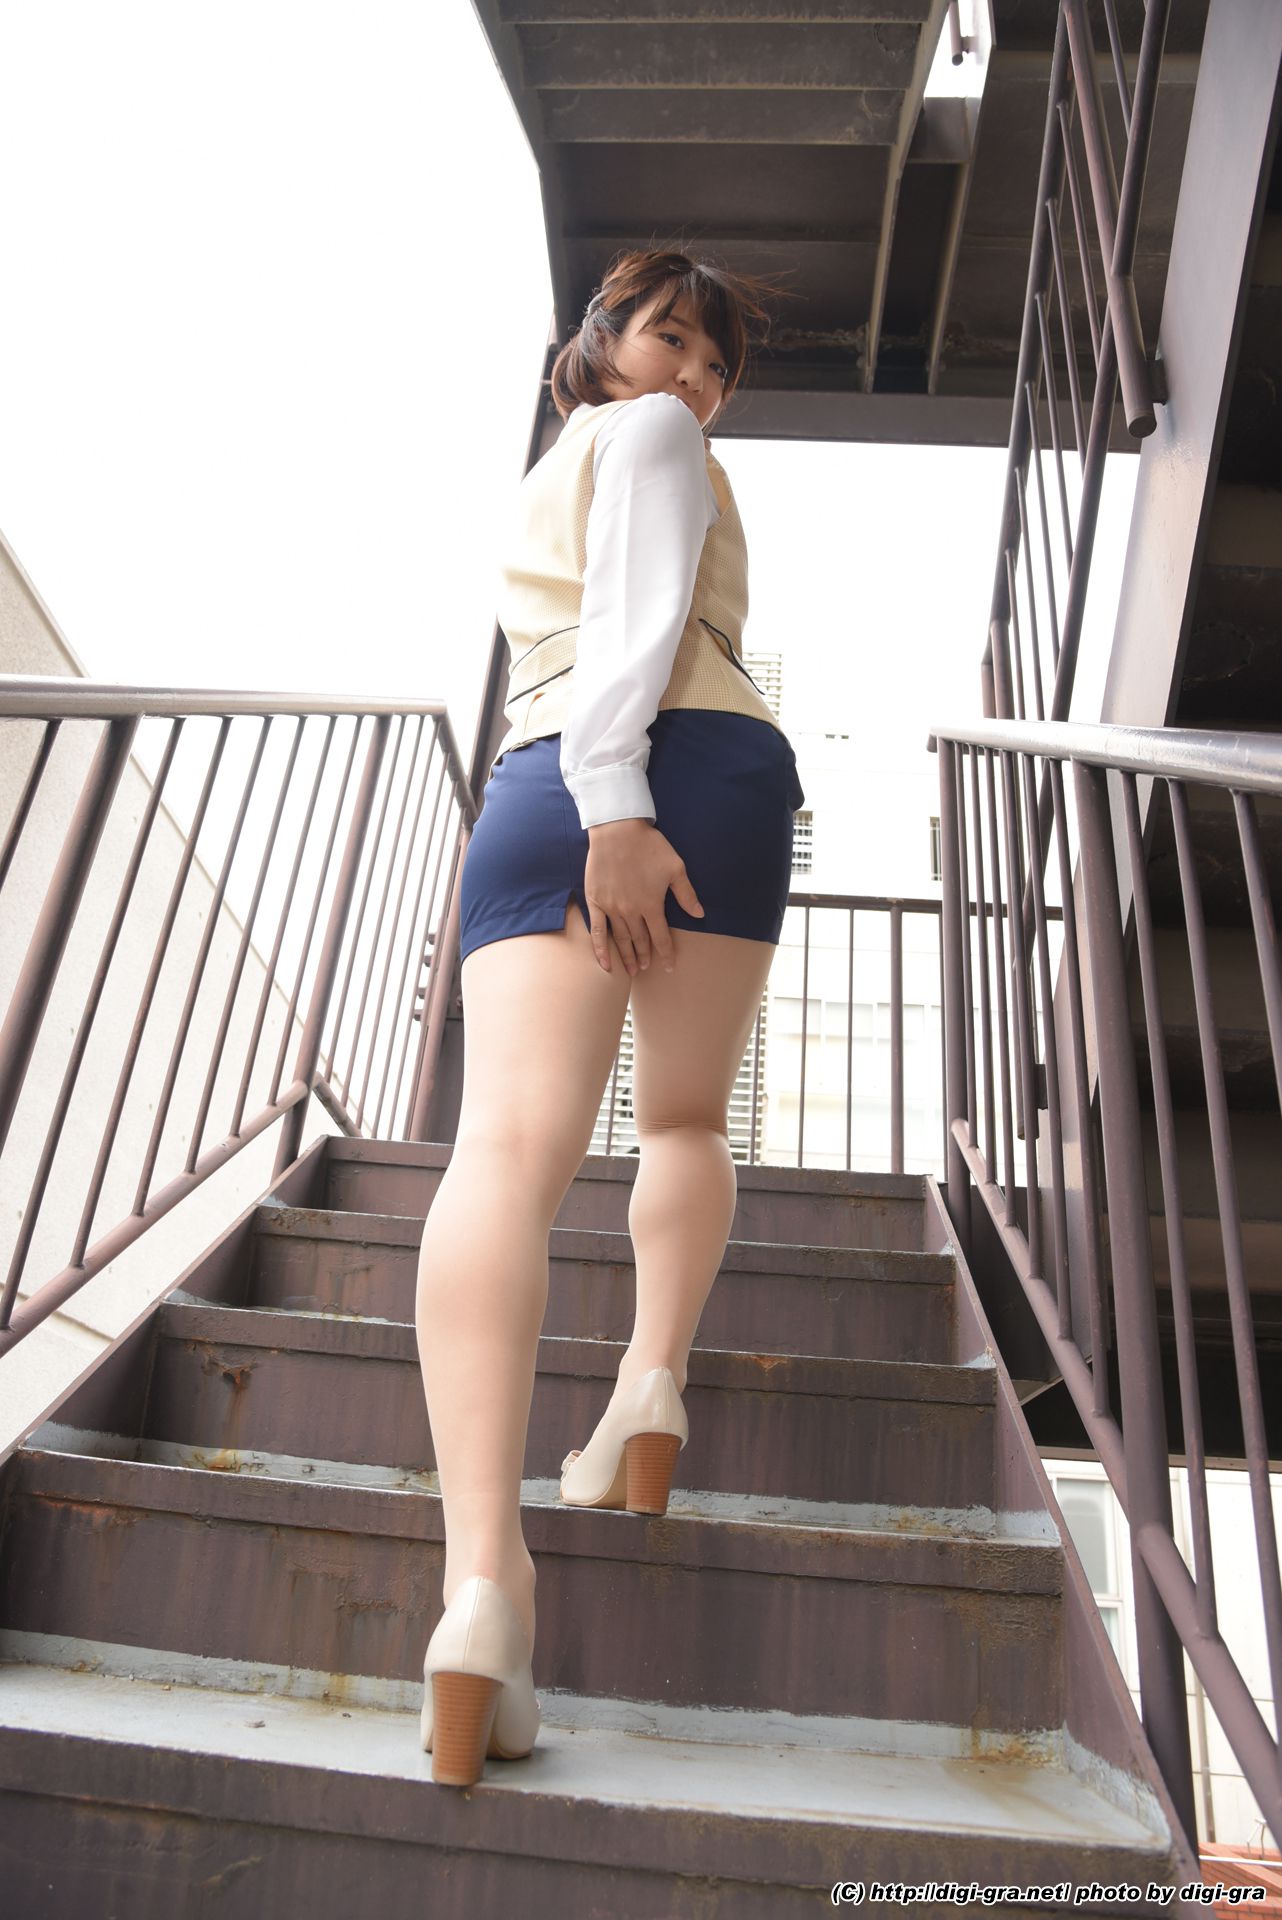 [Digi-Gra] Miyu Kanade かなで自由 Photoset 01